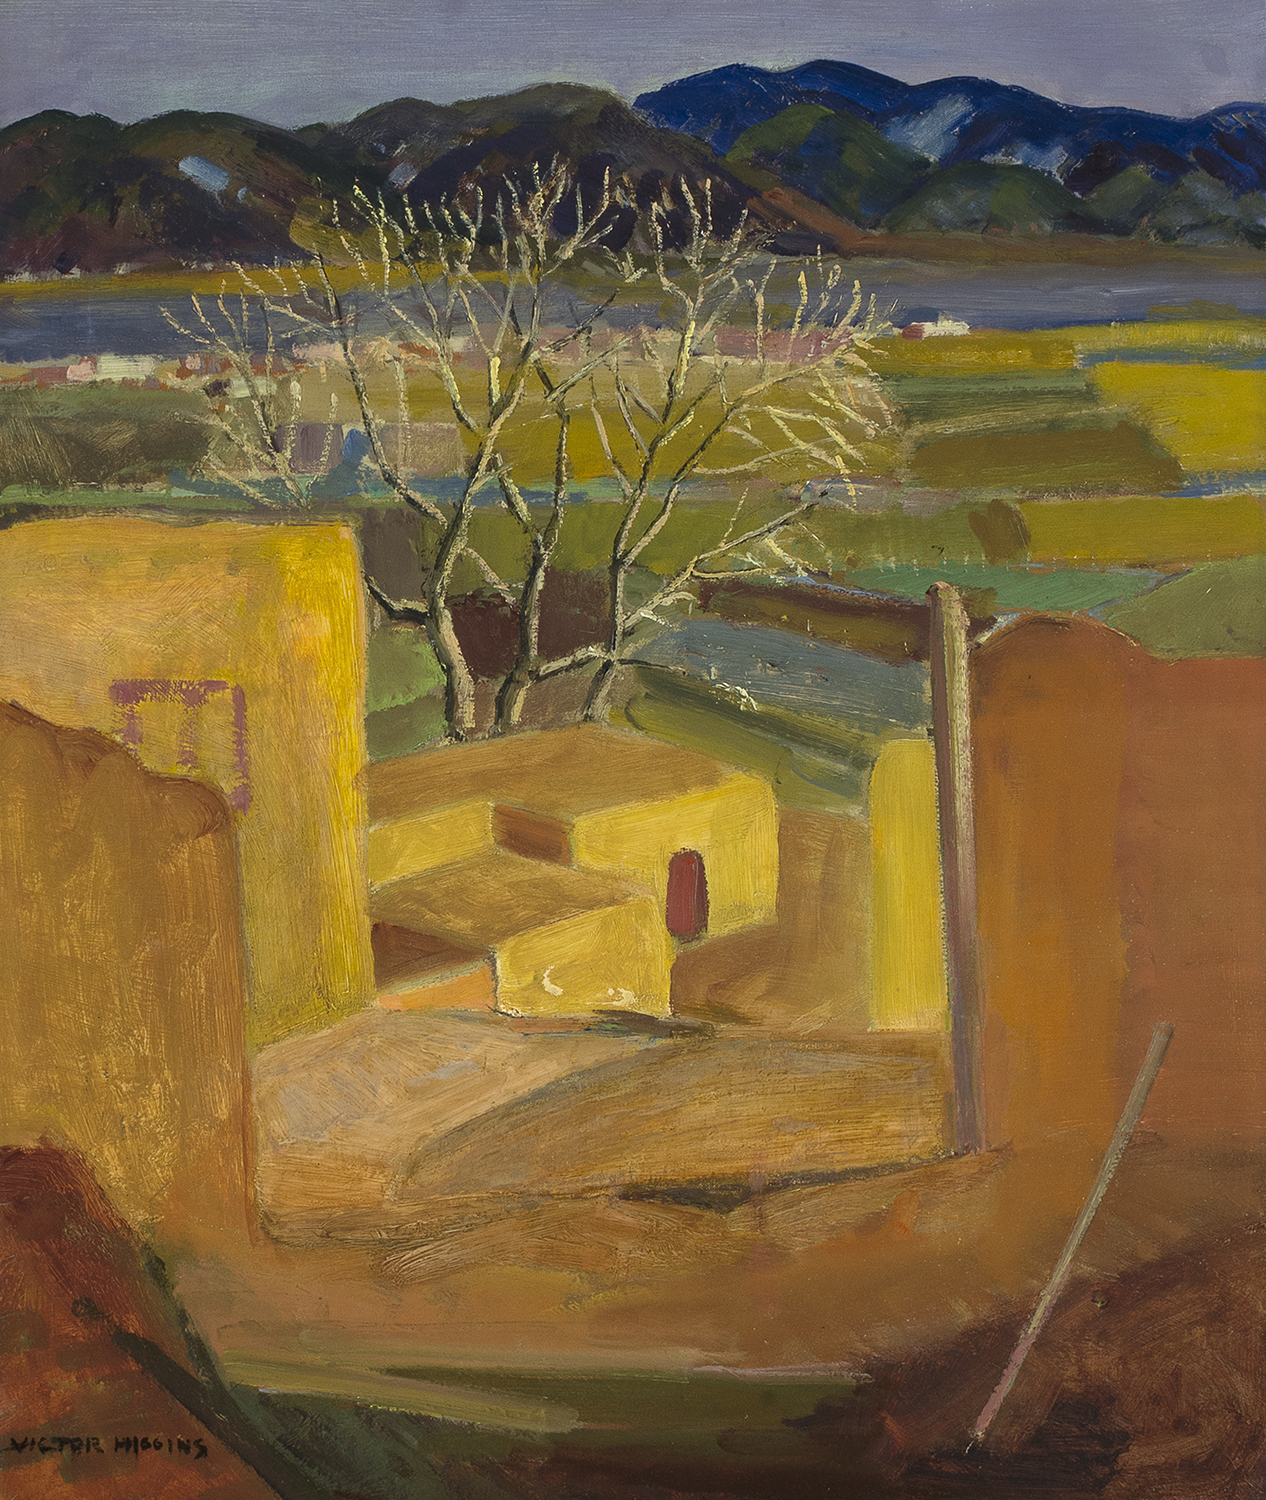 
		                					Victor Higgins		                																	
																											<i>Adobe Gateway,</i>  
																																								ca. 1930s, 
																																								oil on canvas, 
																																								24 x 20 inches 
																								
		                				